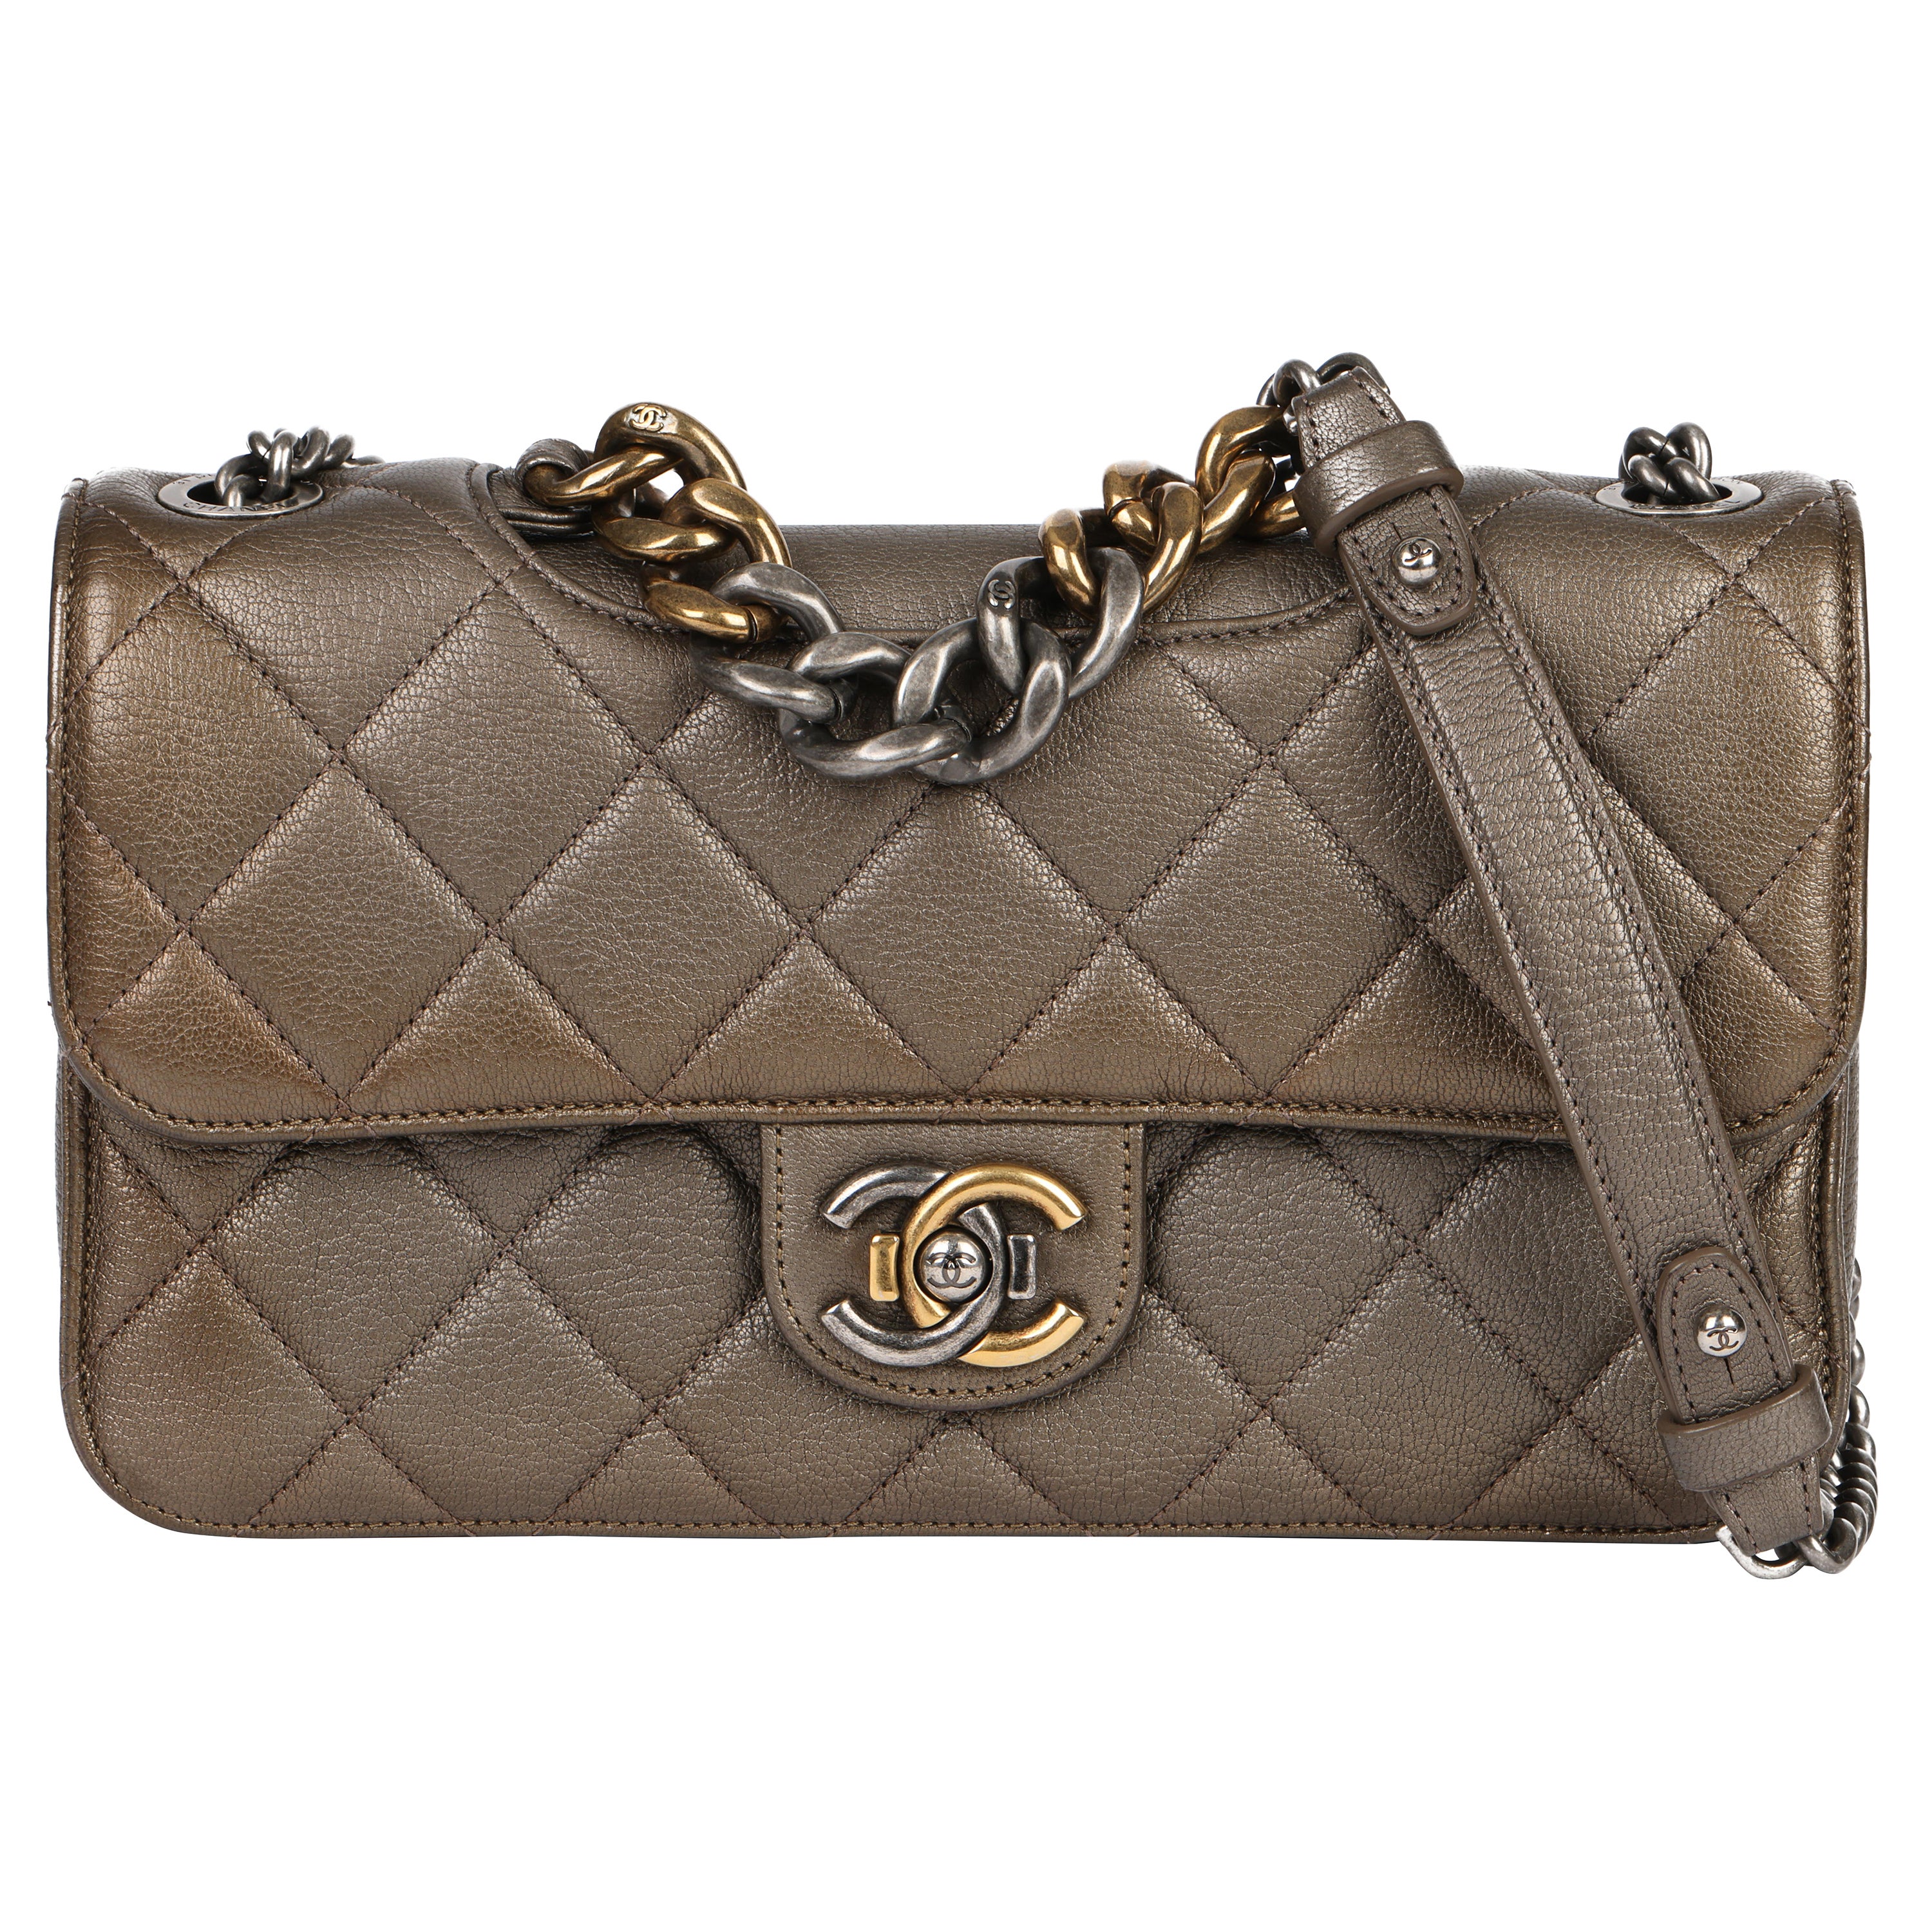 Chanel Bronze Quilted Metallic Goatskin Leather Medium Perfect Edge Flap Bag